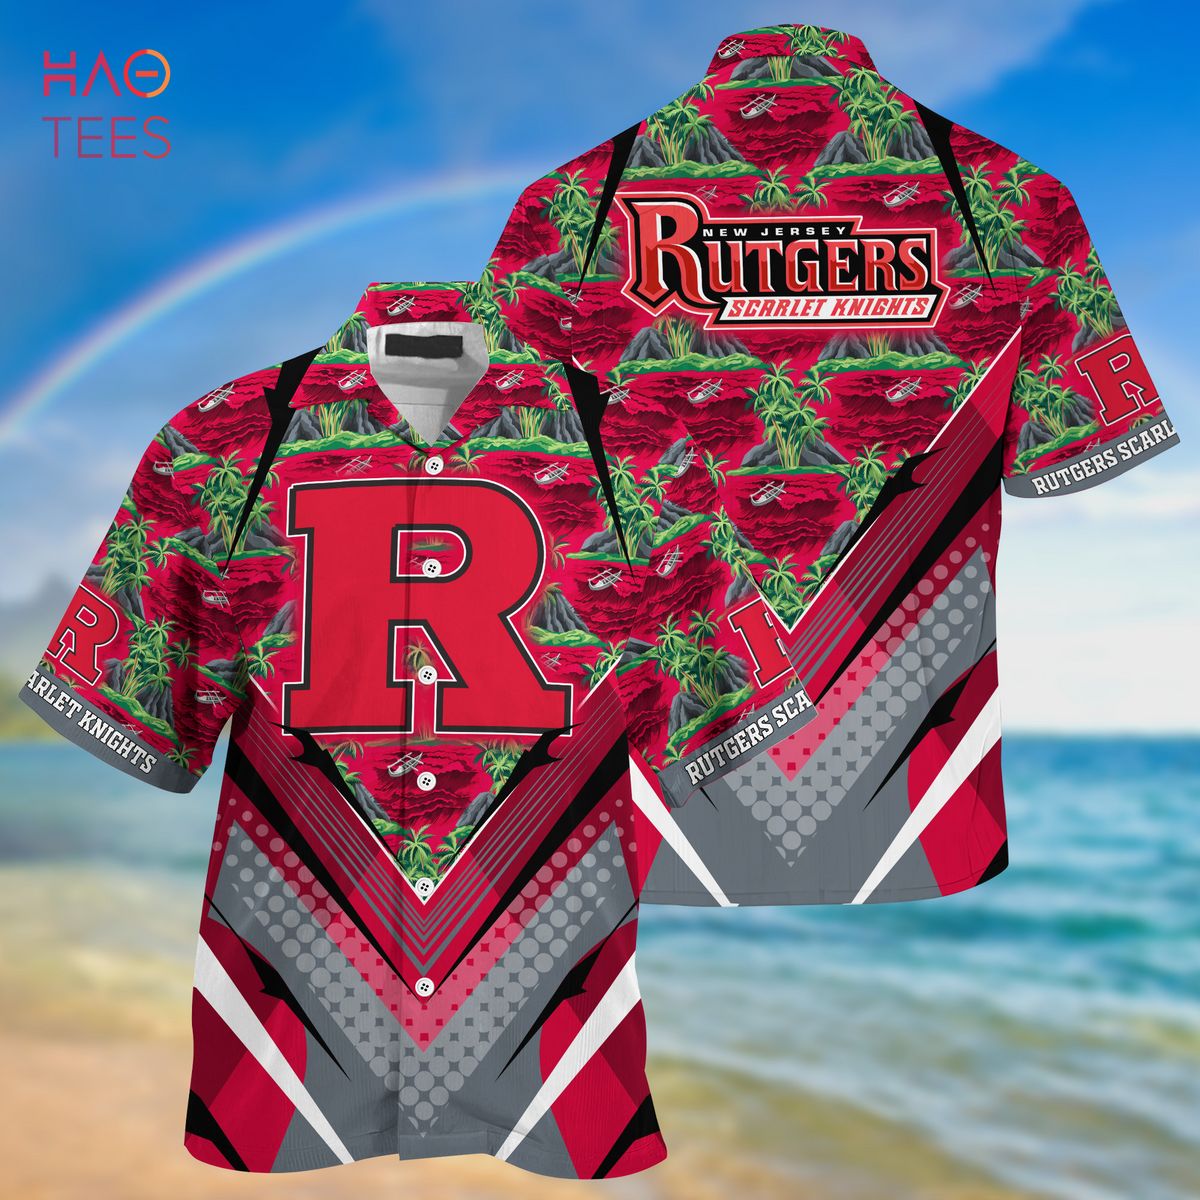 [TRENDING] Rutgers Scarlet Knights Summer Hawaiian Shirt And Shorts, For Sports Fans This Season